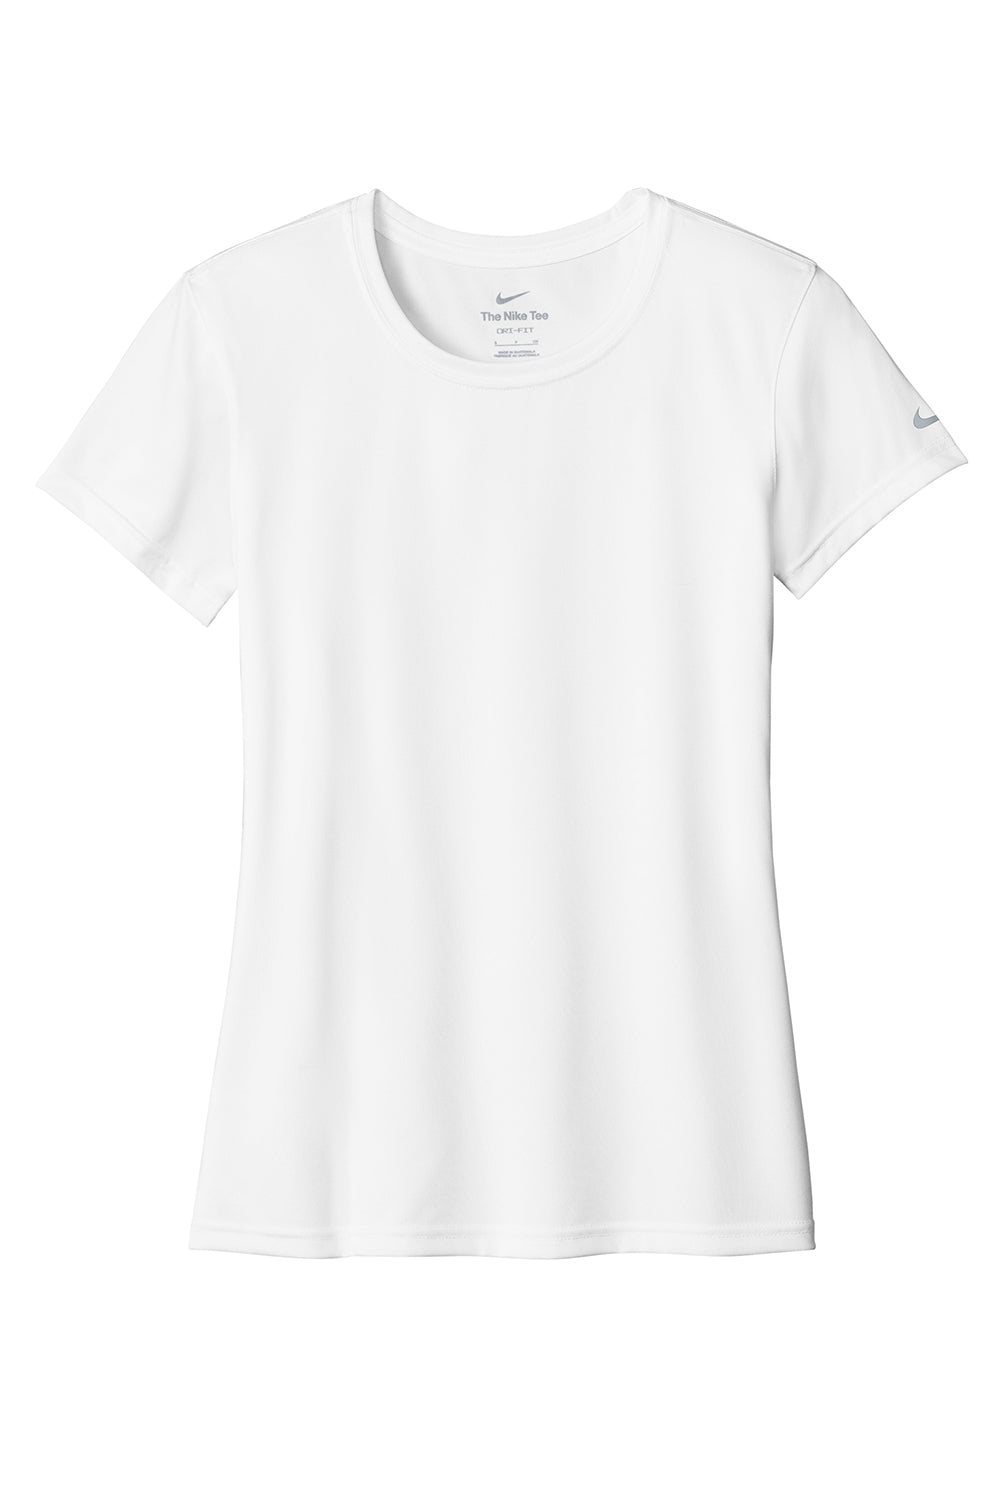 Nike NKDX8734 Womens rLegend Dri-Fit Moisture Wicking Short Sleeve Crewneck T-Shirt White Flat Front